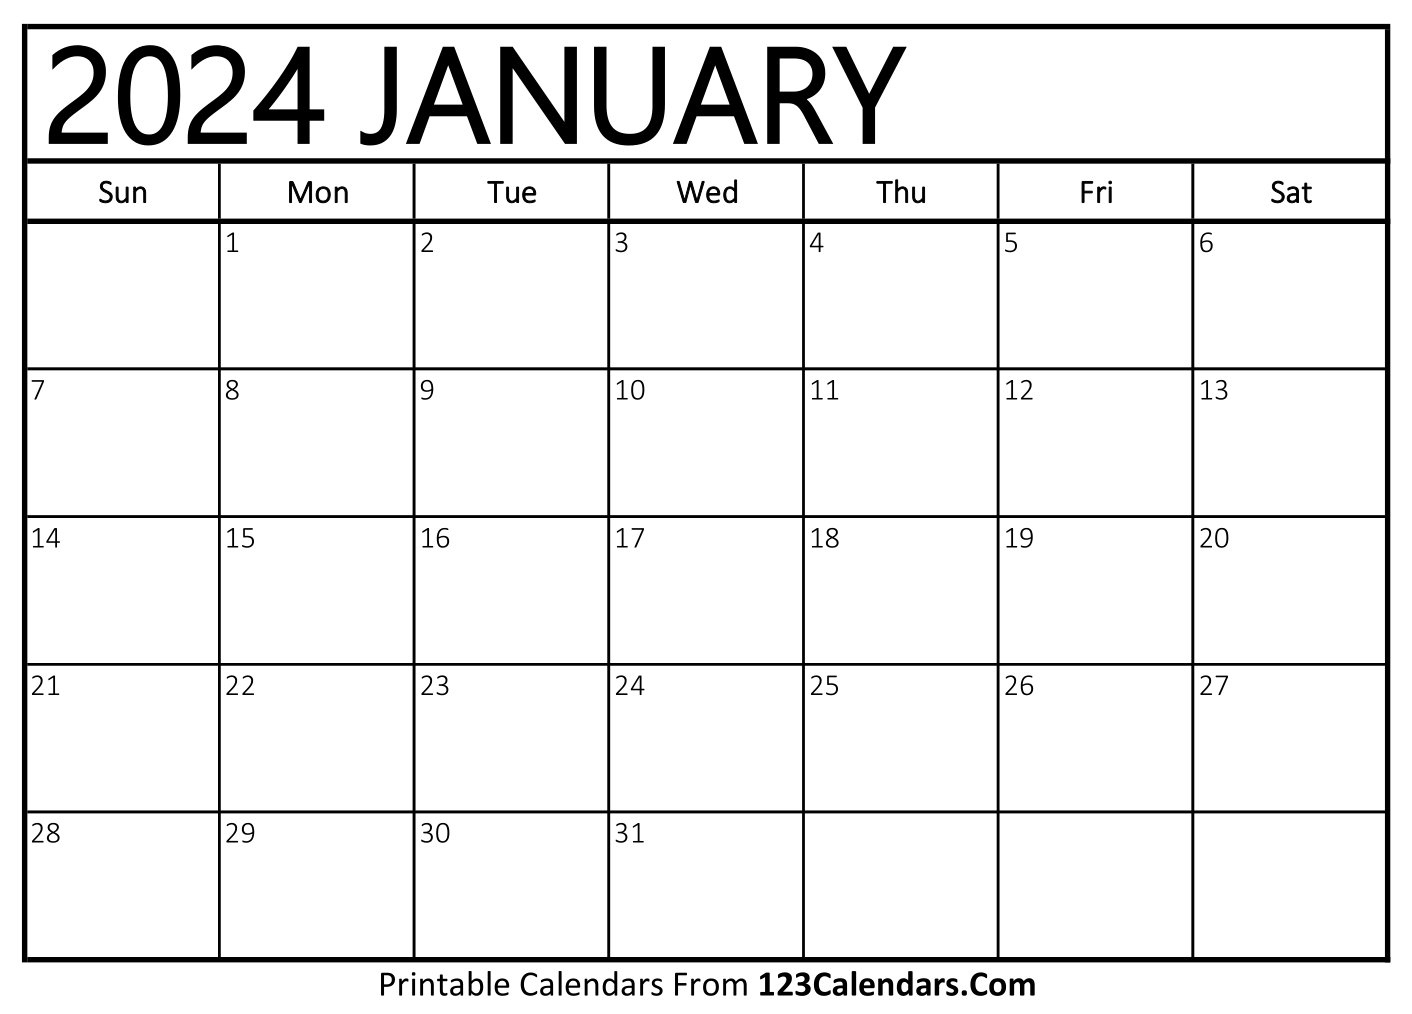 Printable January 2024 Calendar Templates - 123Calendars | Google Calendar 2024 Printable